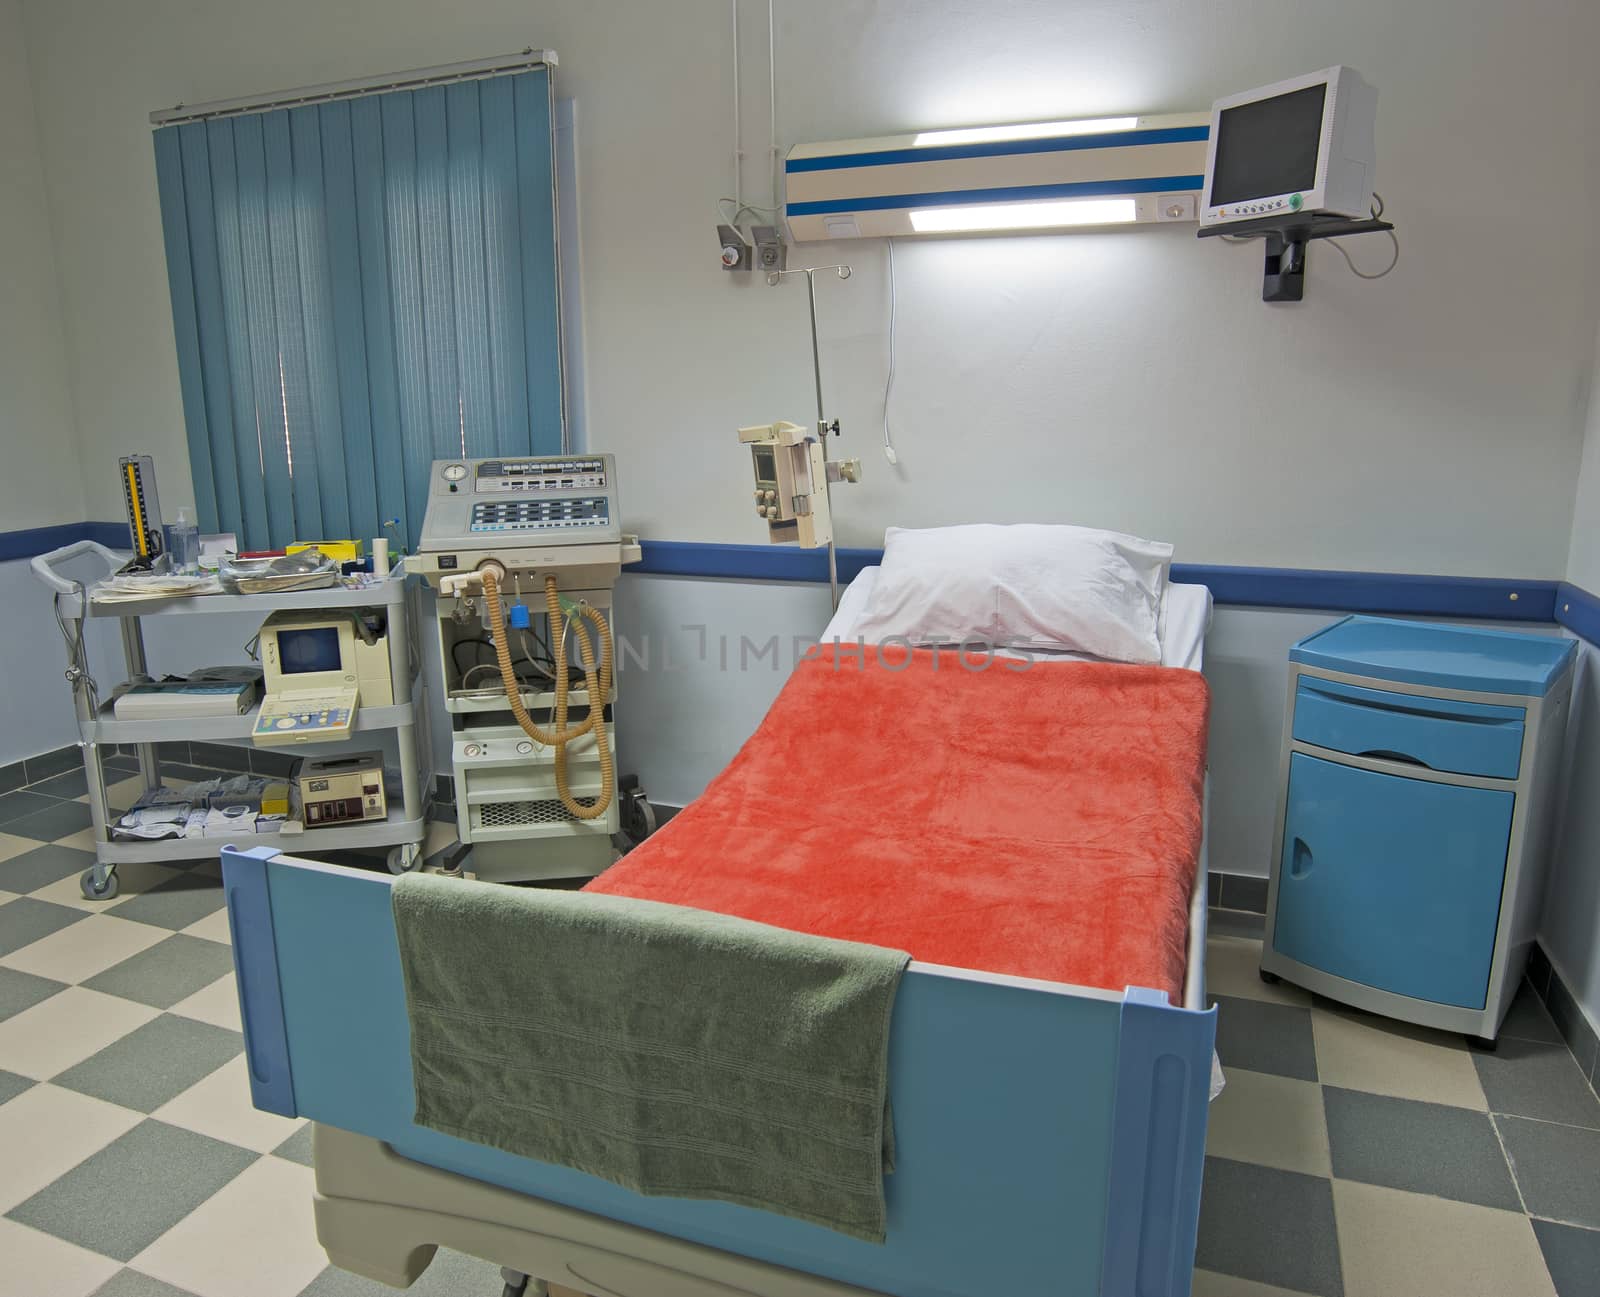 ICU ward in a medical center by paulvinten